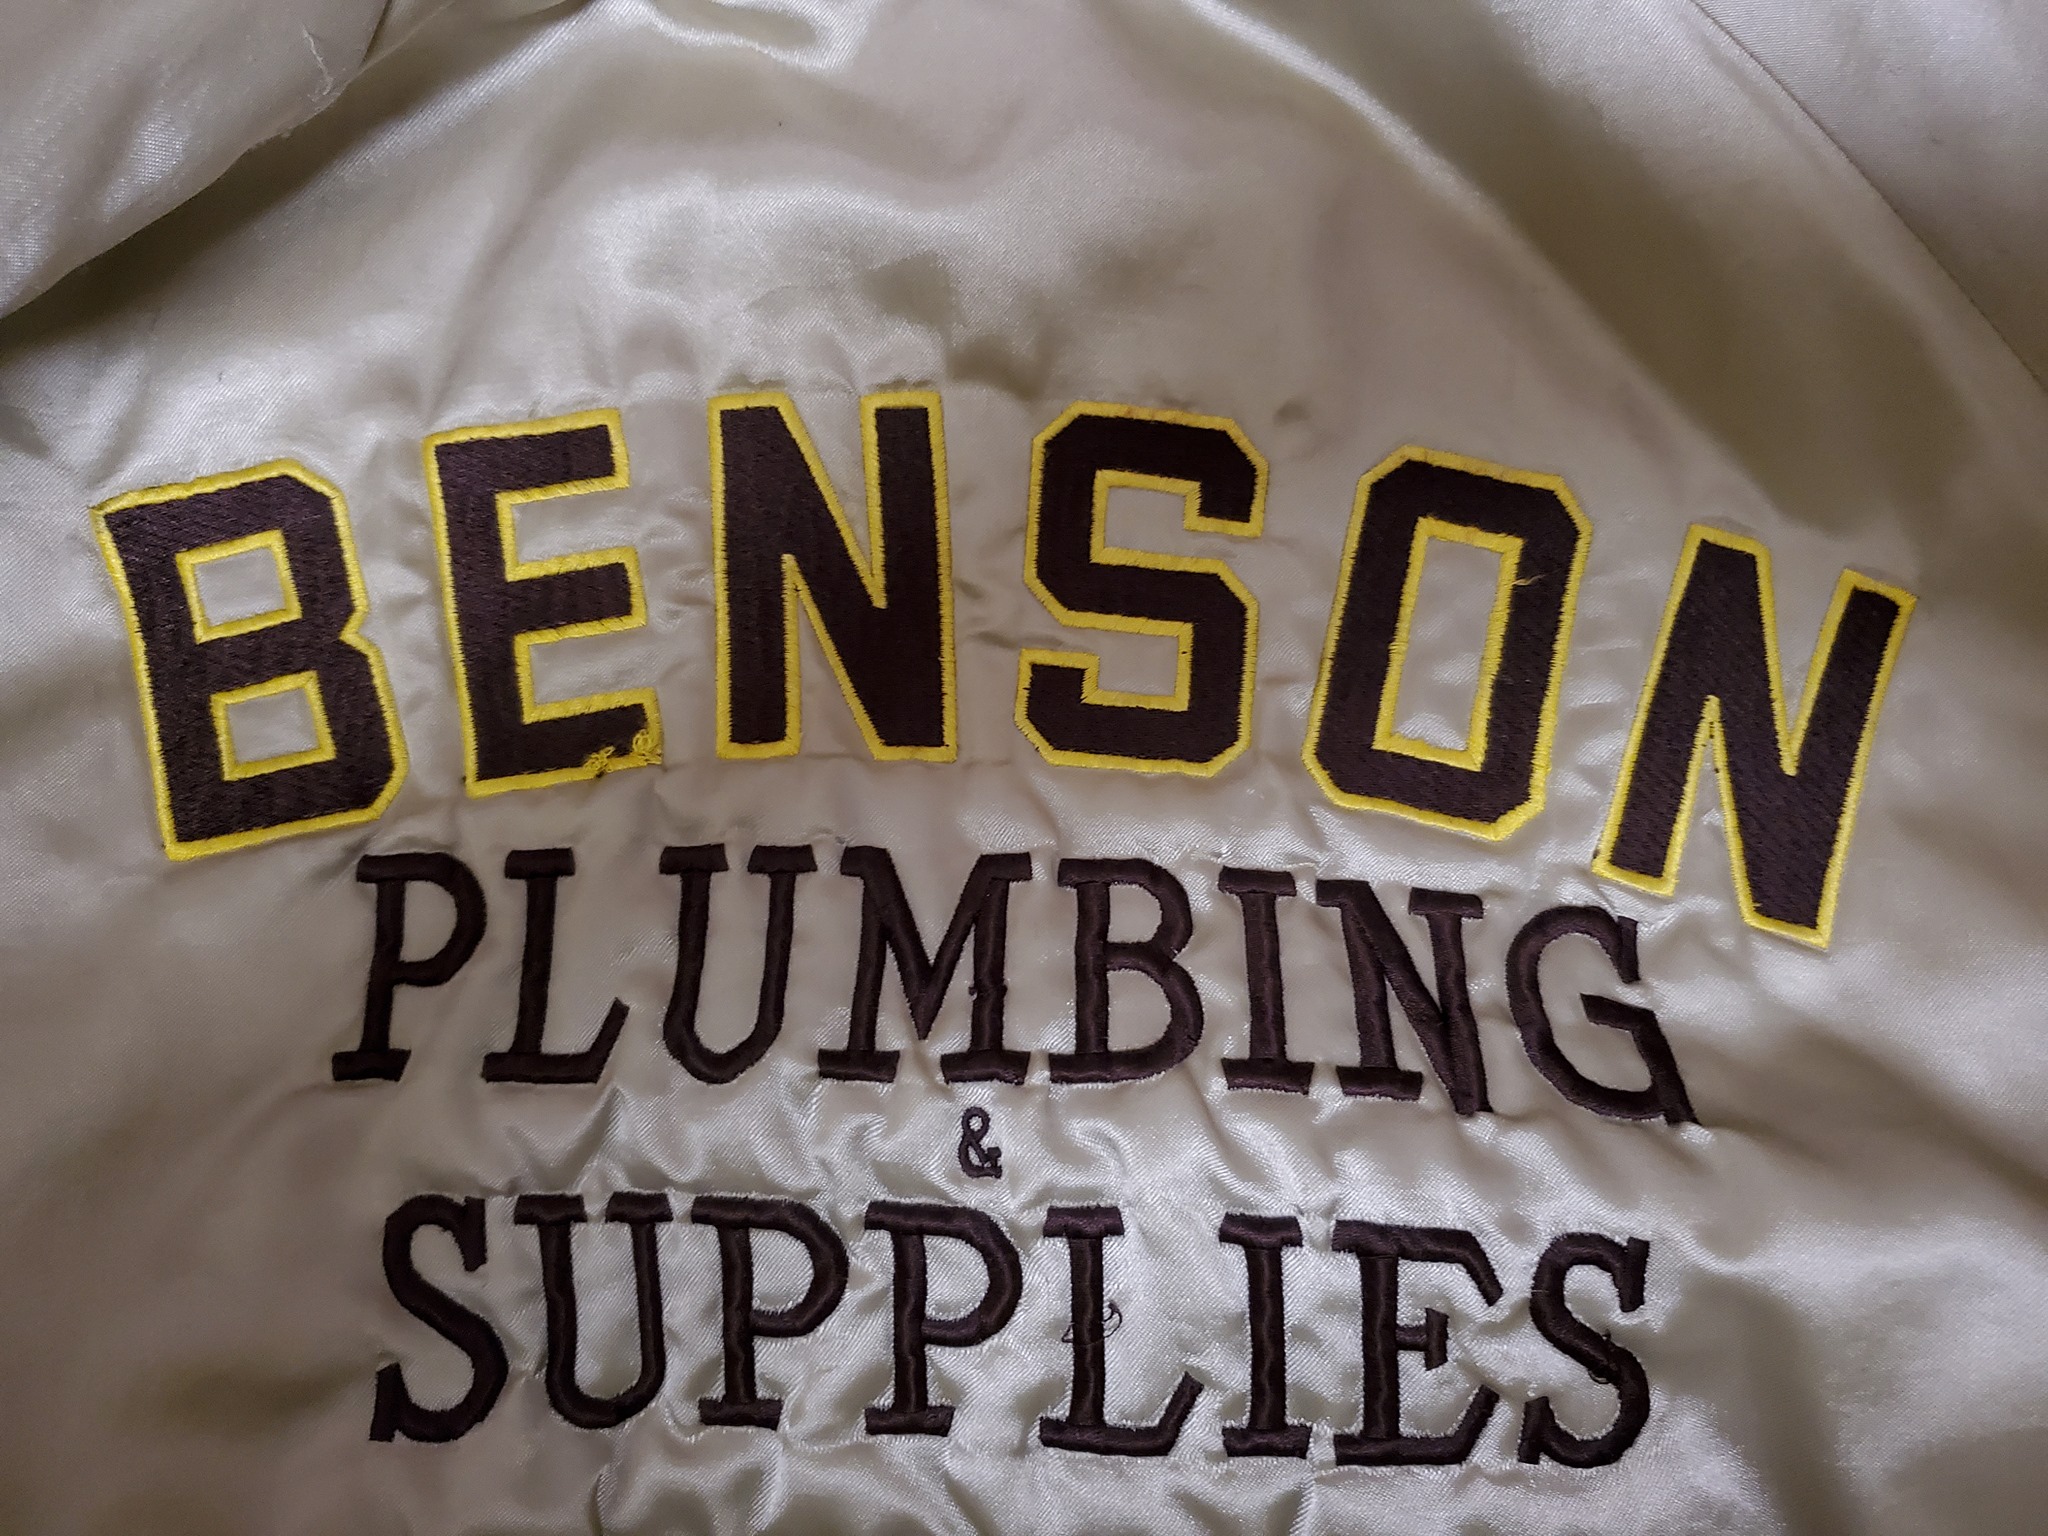 Benson Plumbing & Supplies 630 Broadway St, King City California 93930